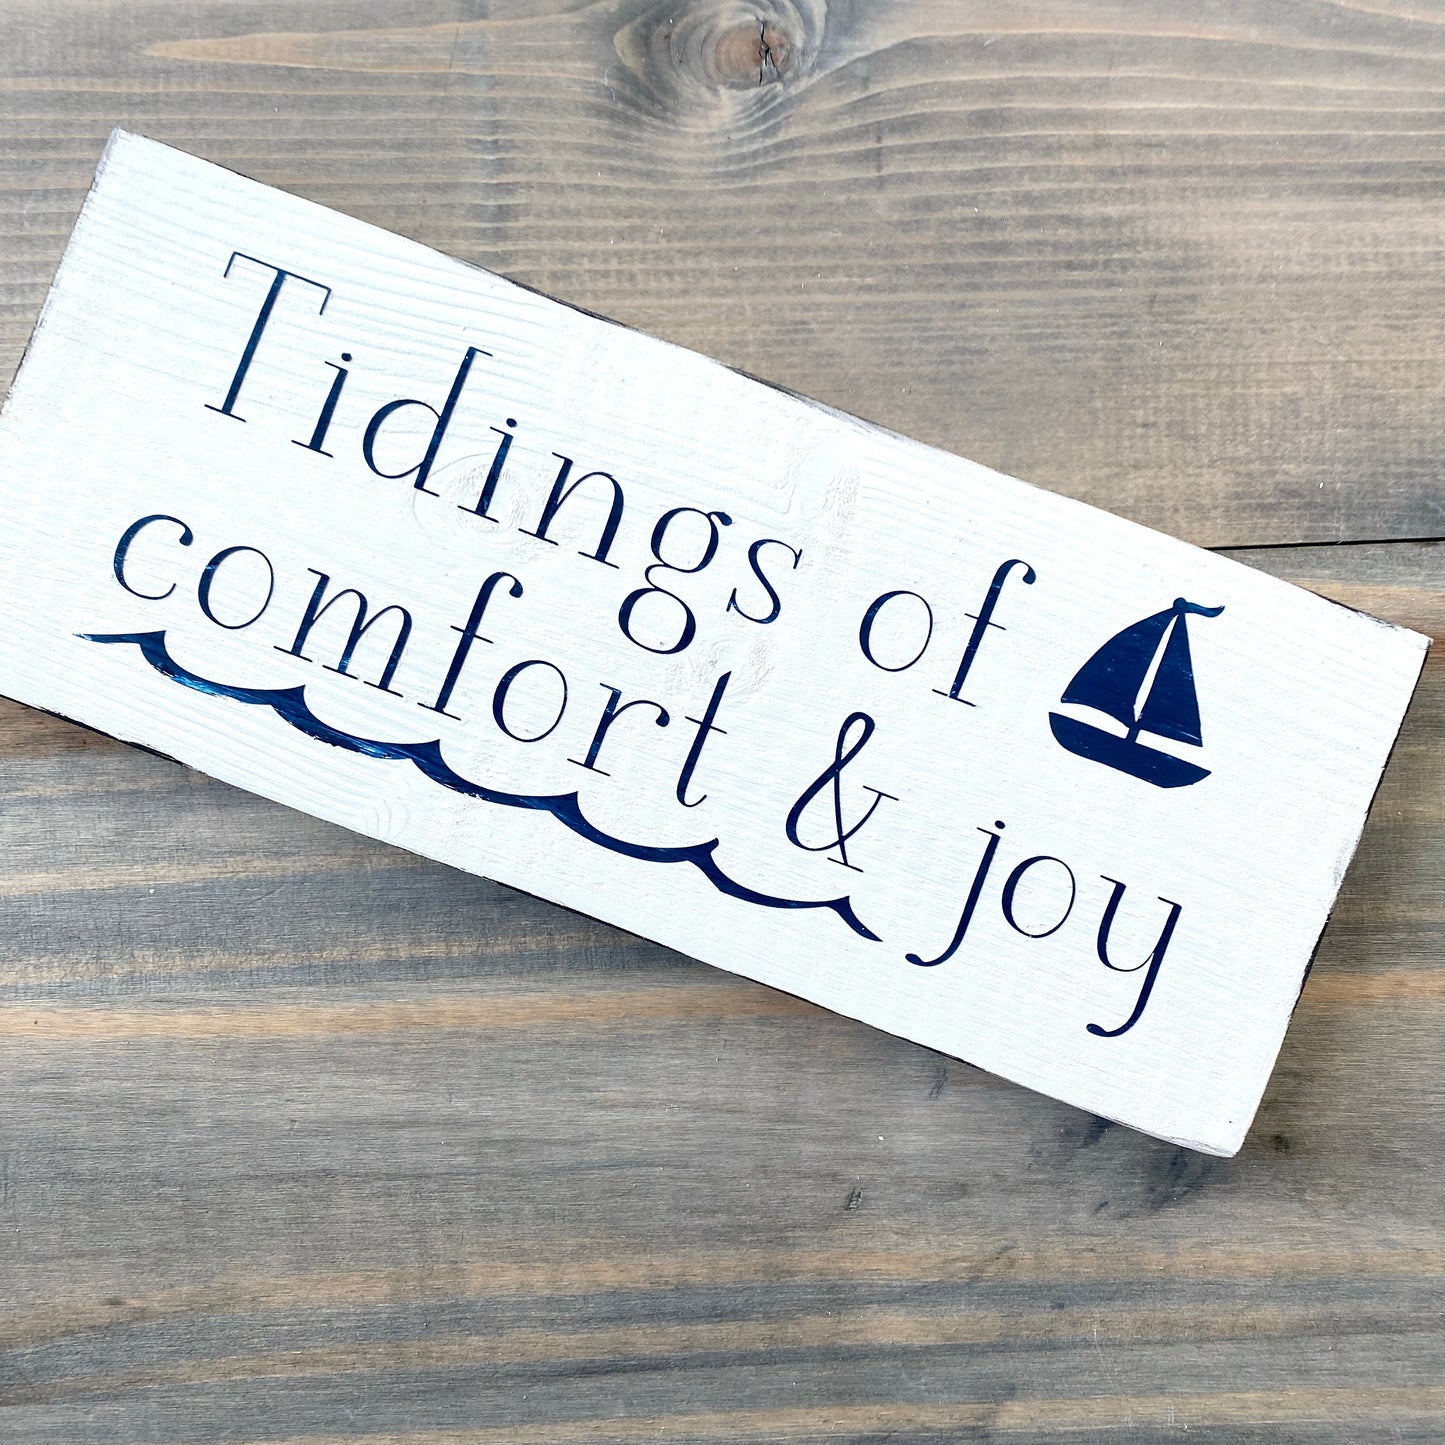 Tidings of comfort & joy